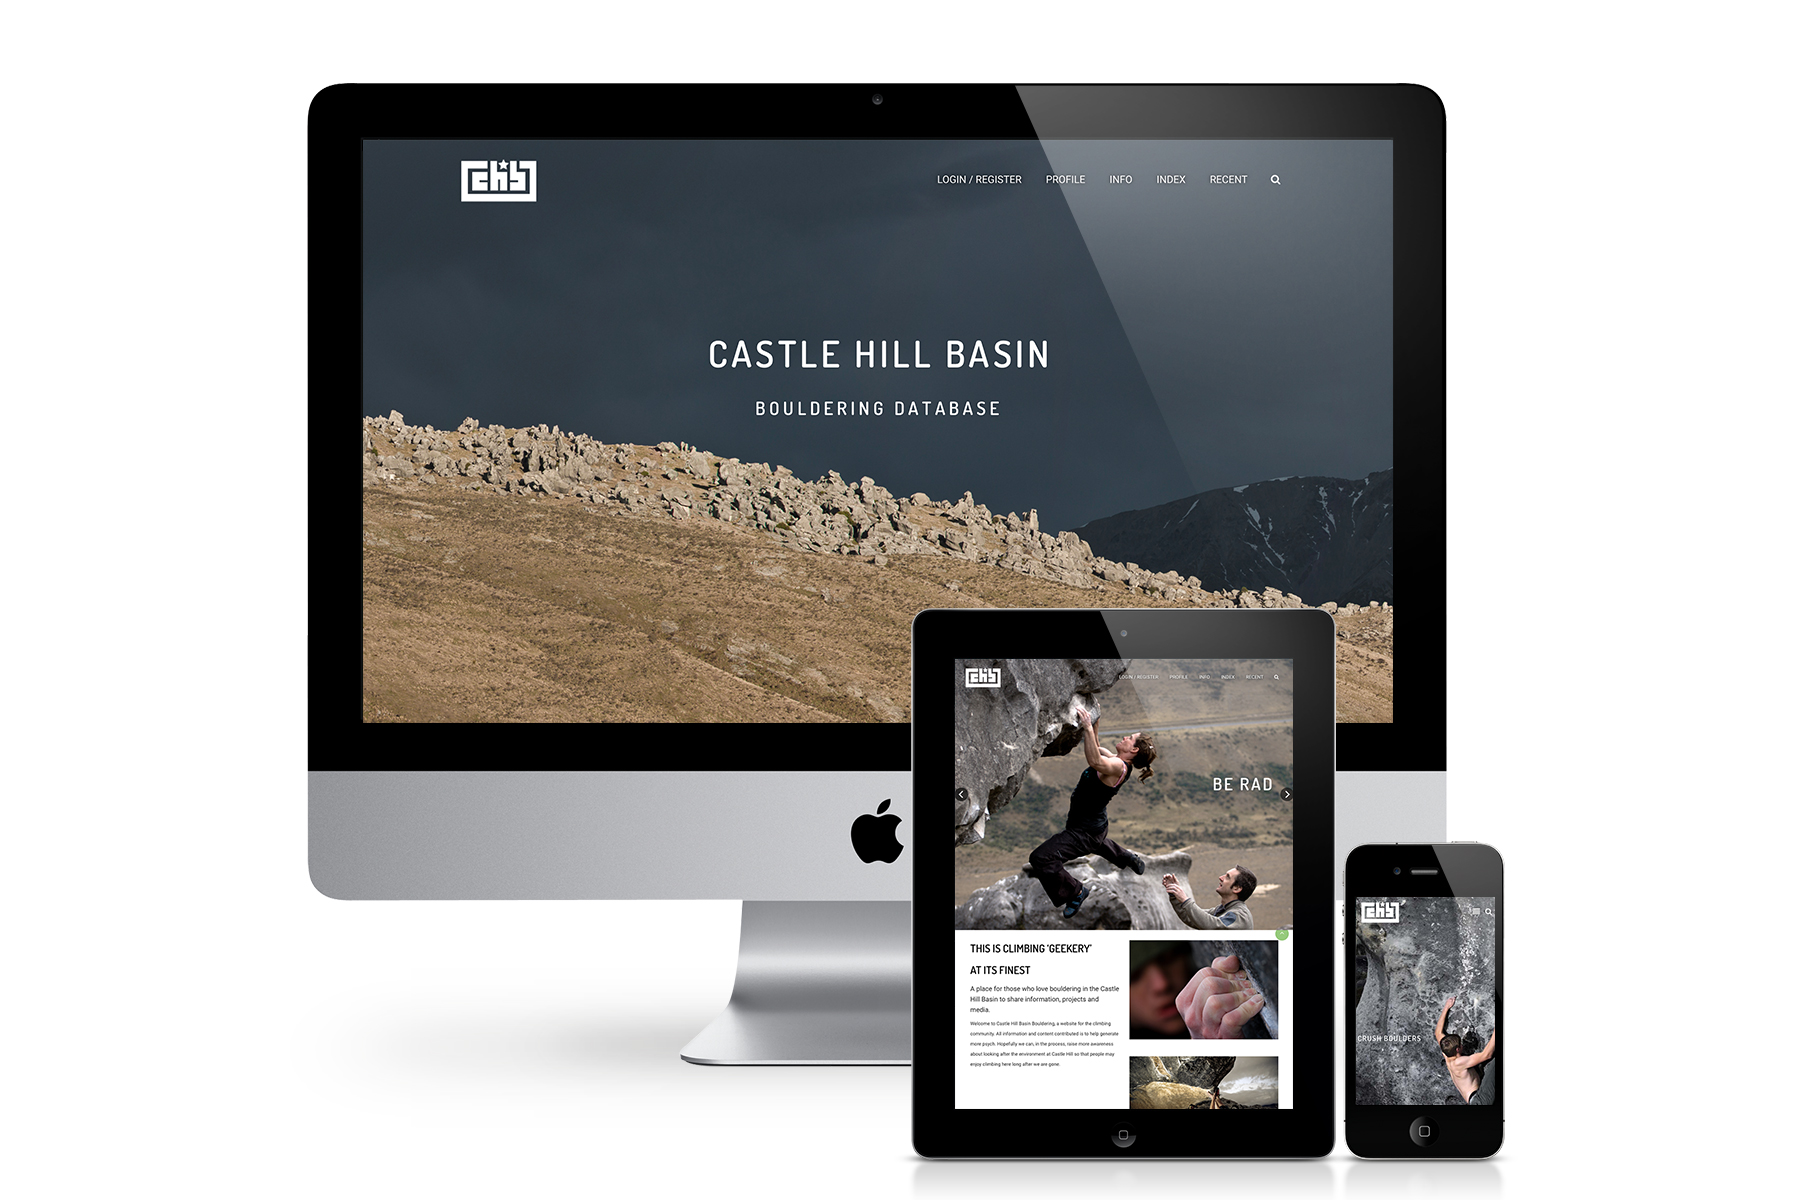 Castle Hill Basin website design